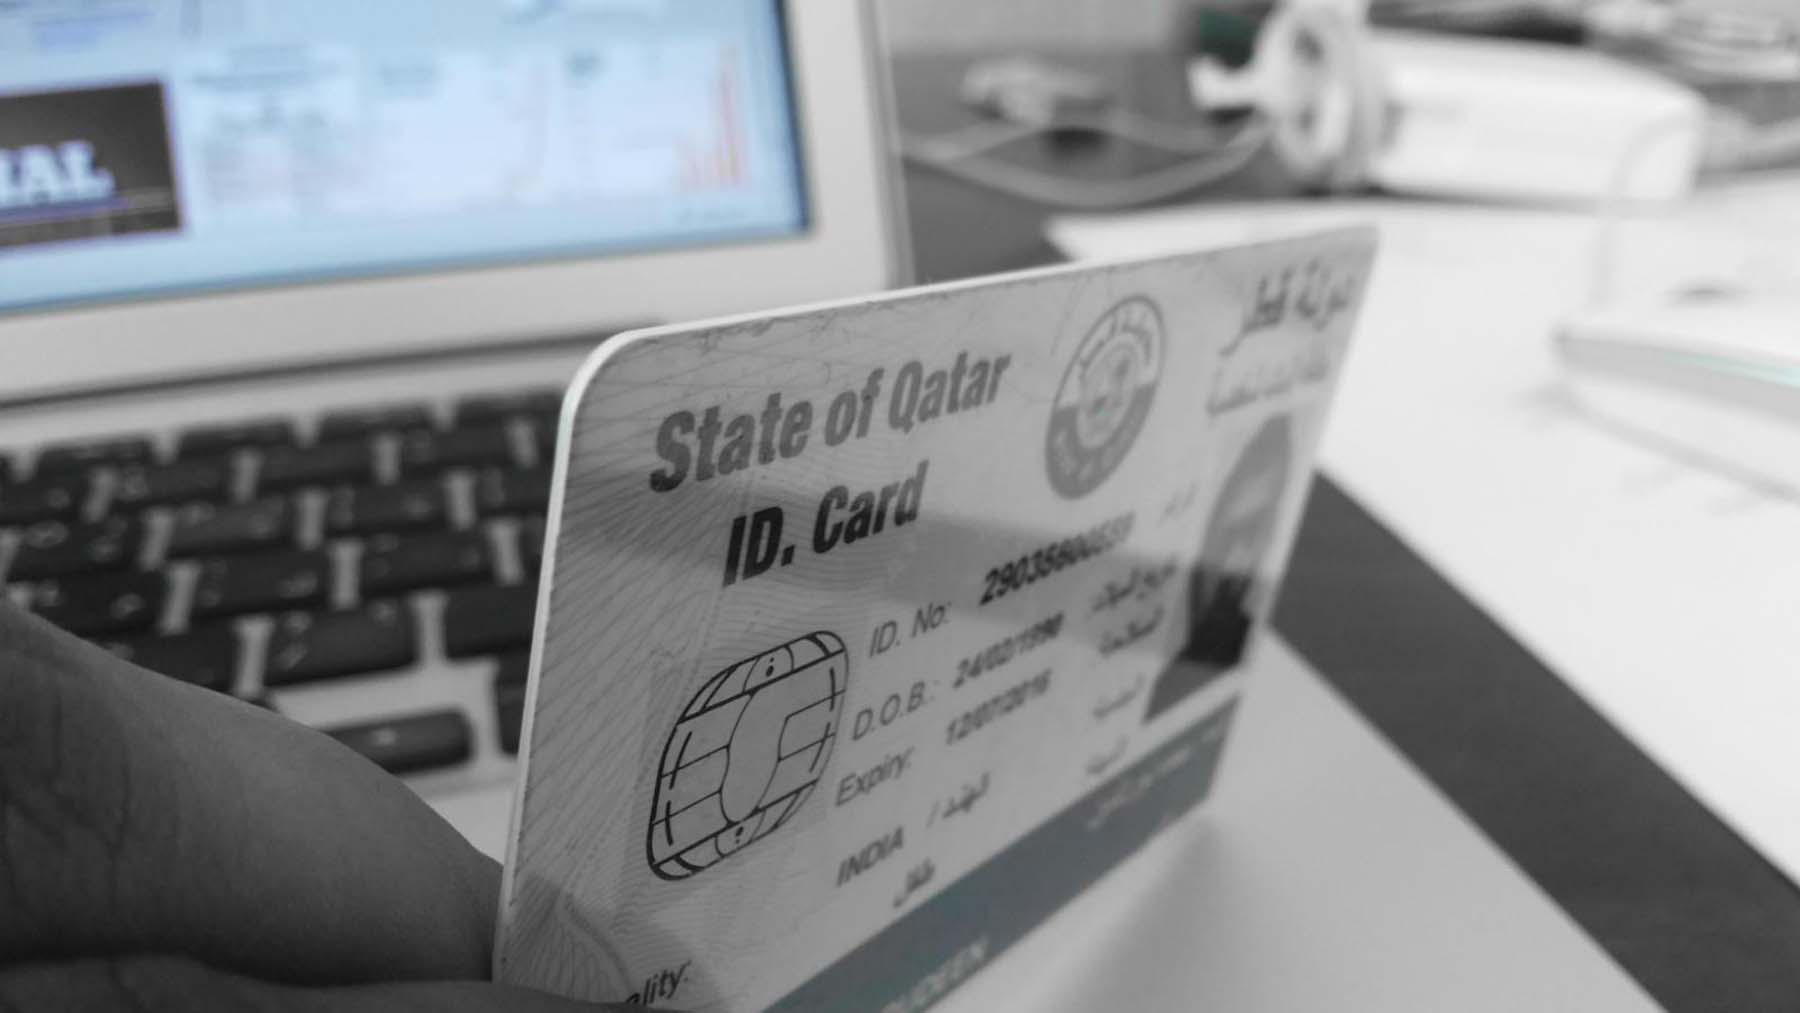 State of Qatar ID card